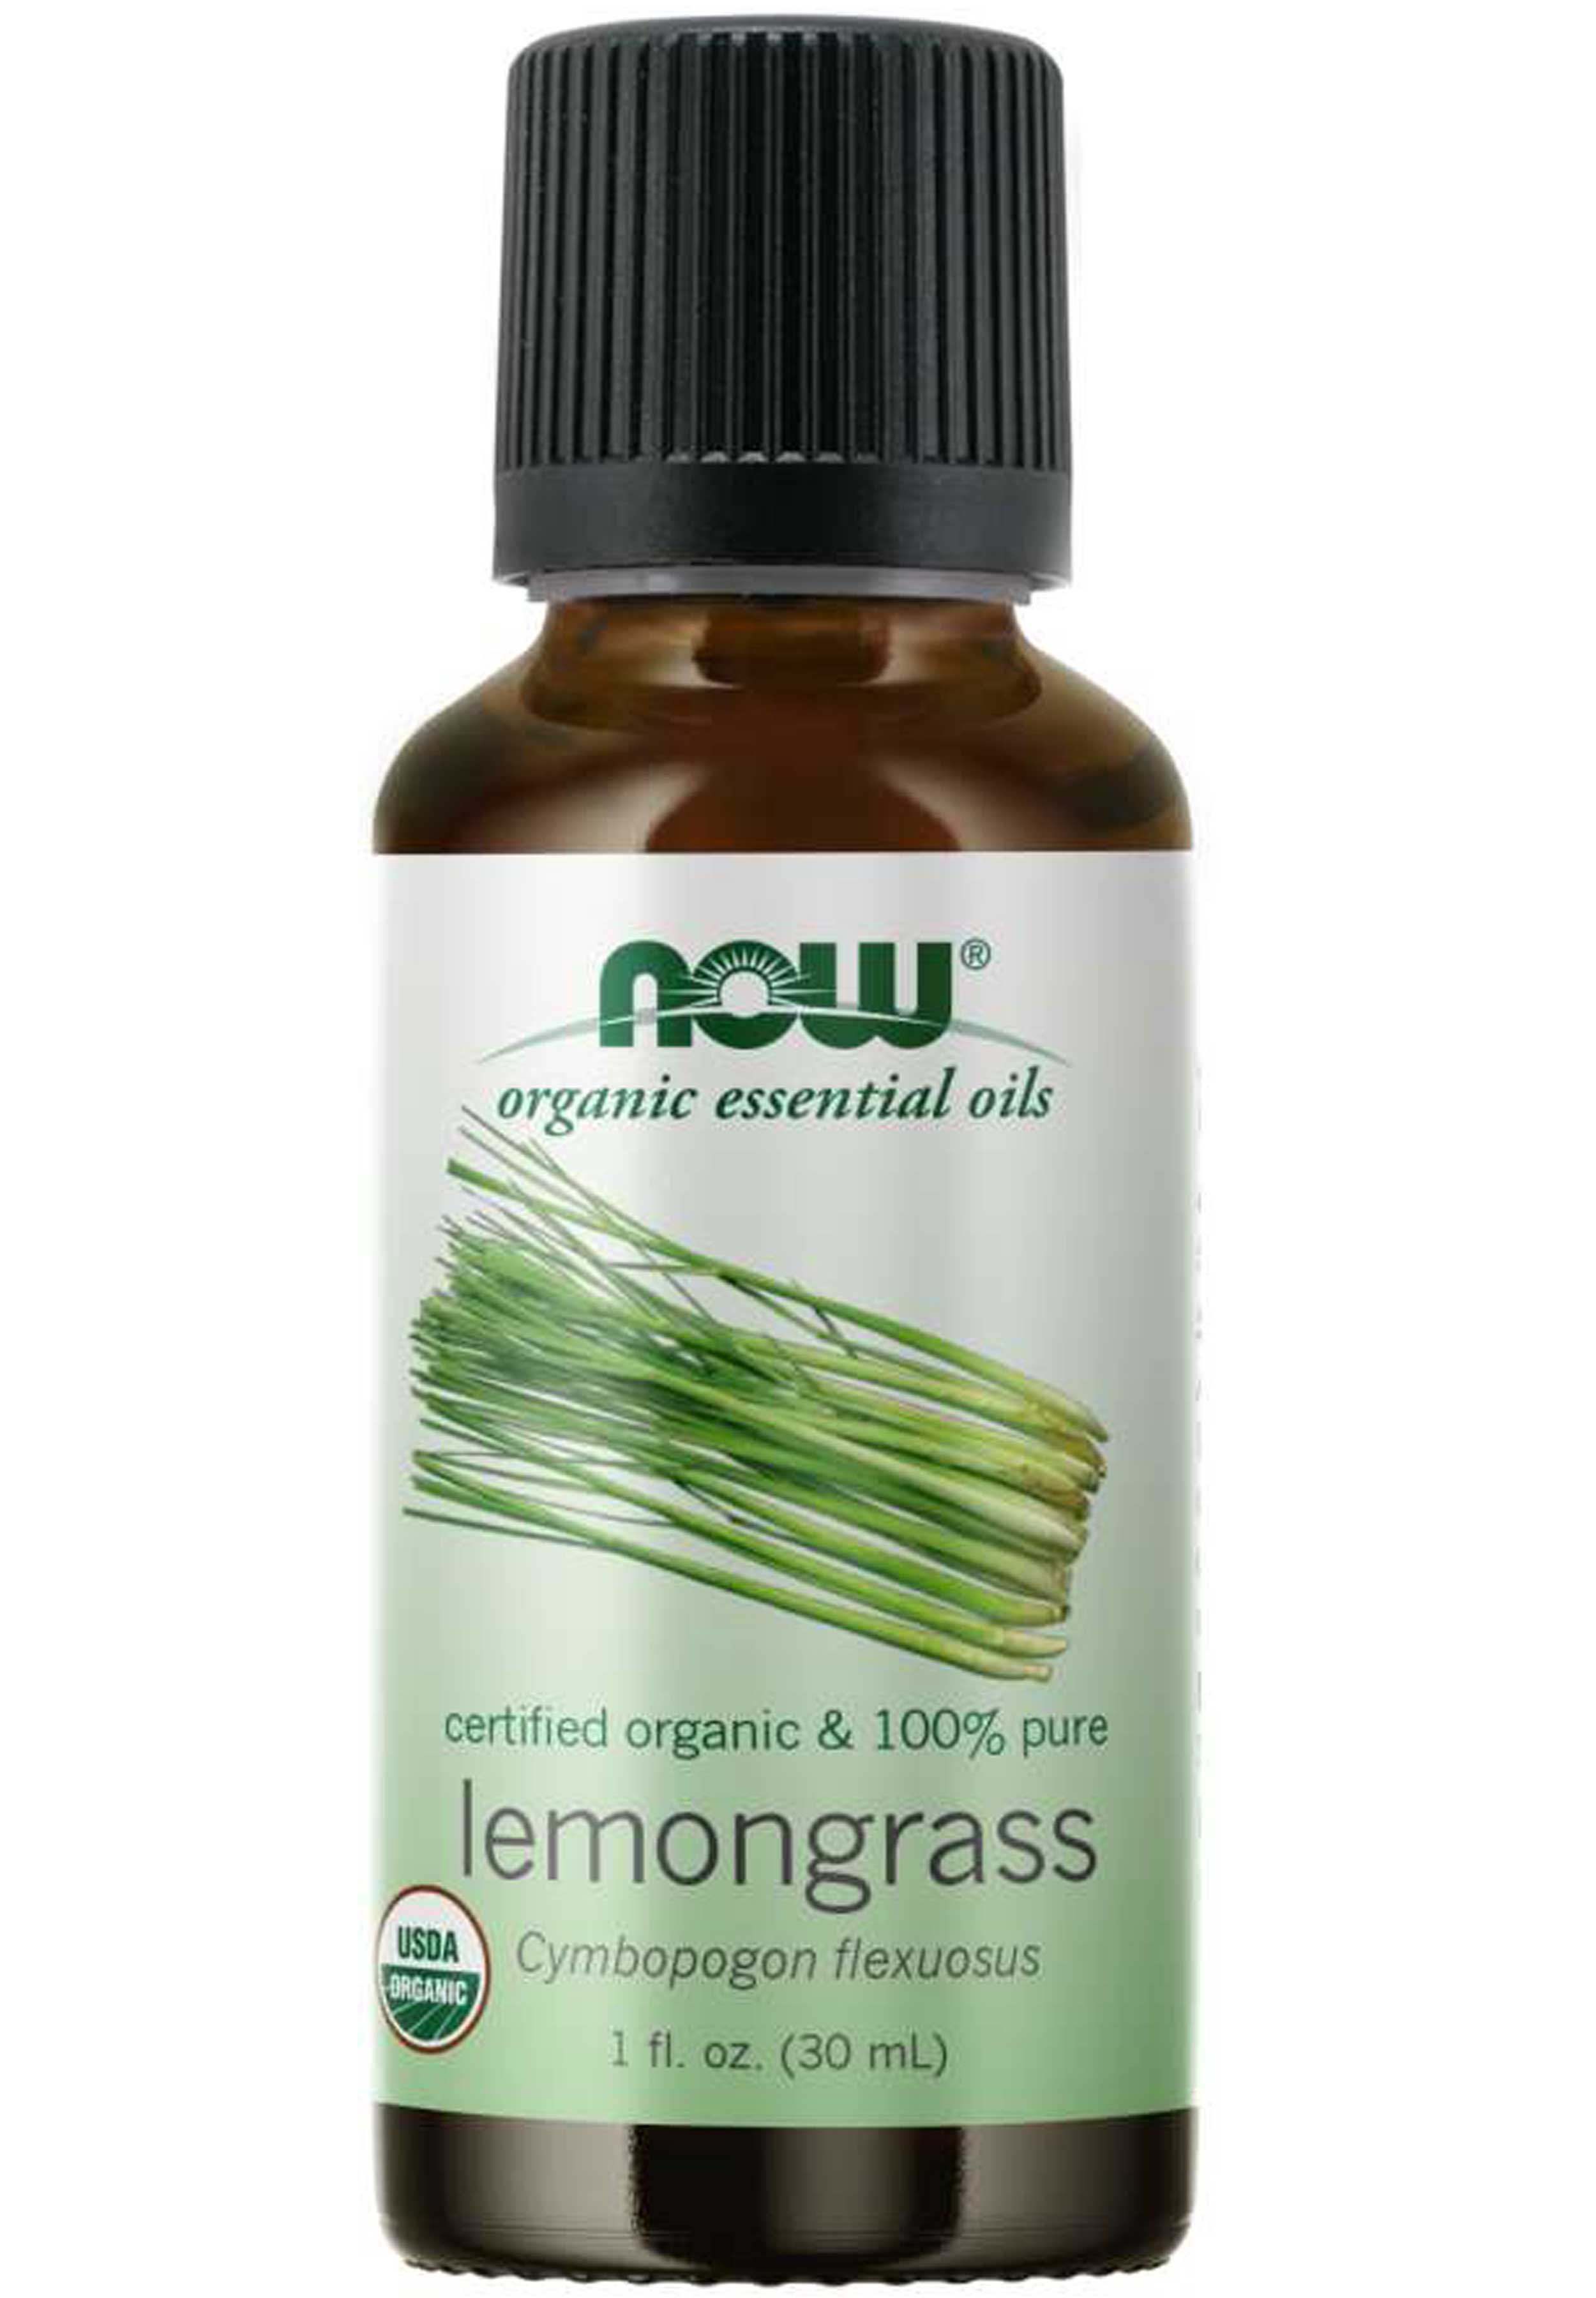 NOW Organic Essential Oils Lemongrass Oil, Organic